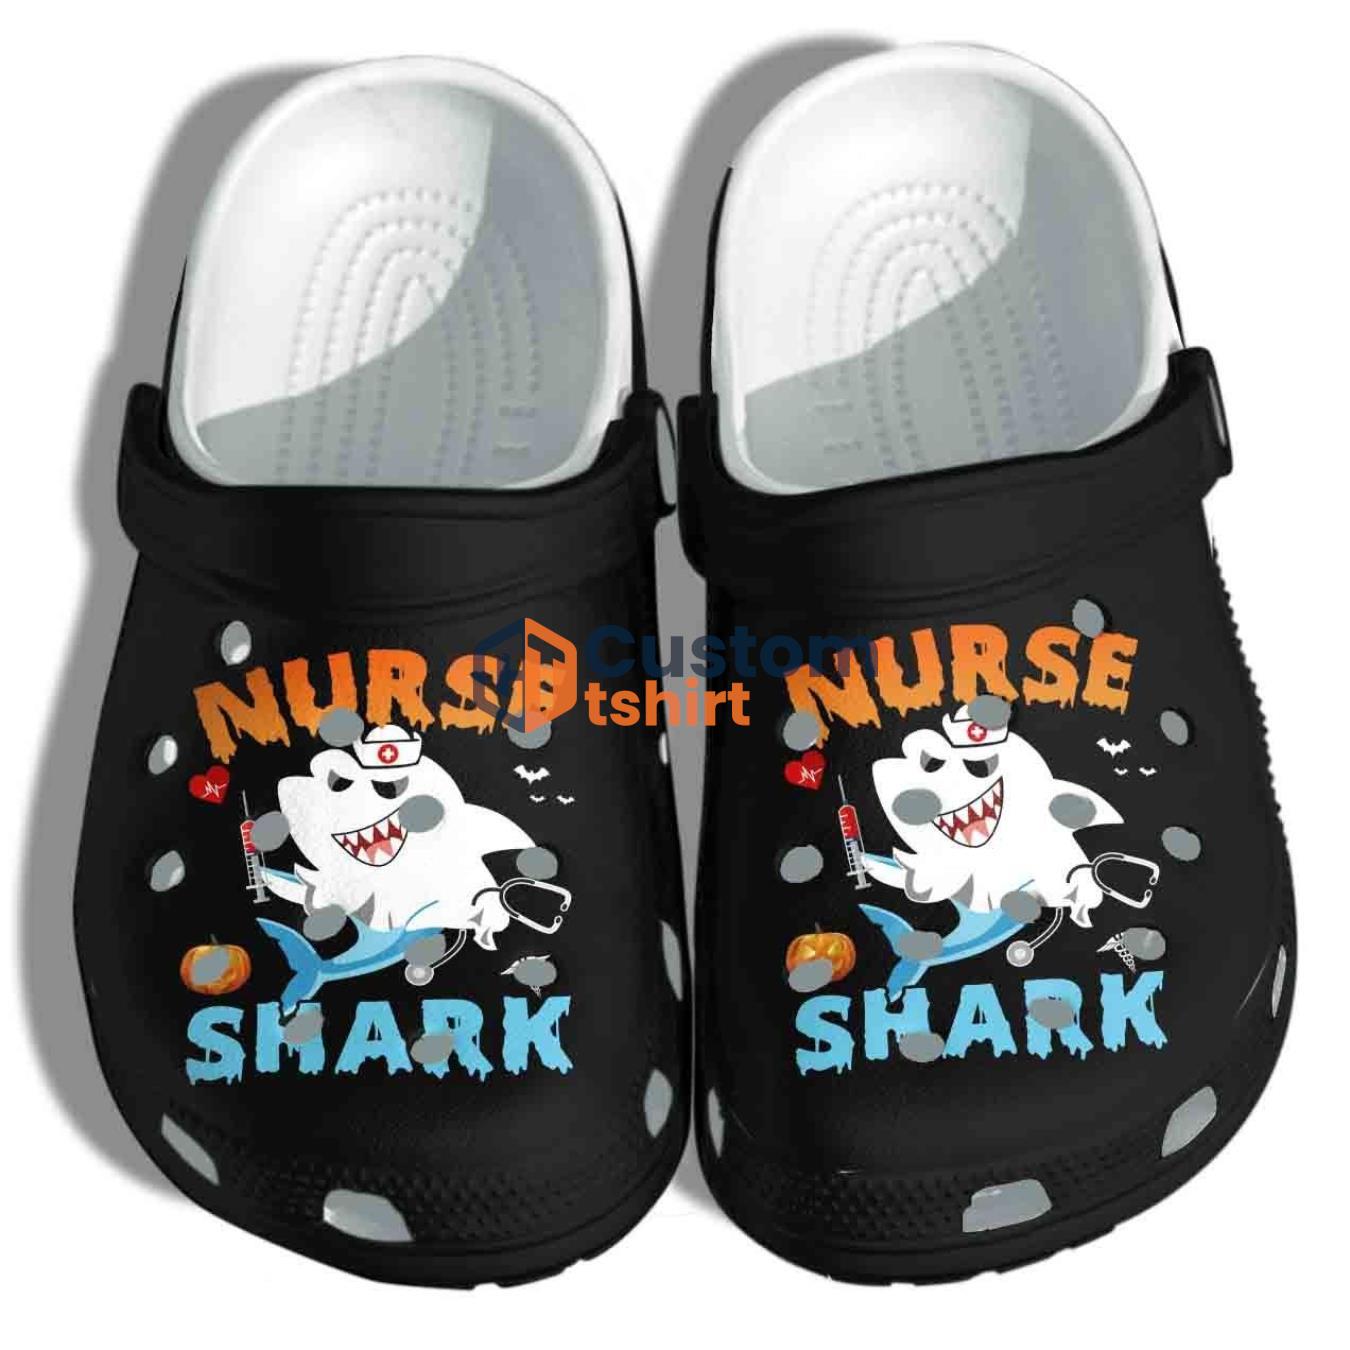 Nurse Shark Halloween Clog Shoes - Funny Animal band Birthday Gift For Man Women Product Photo 1 Product photo 1